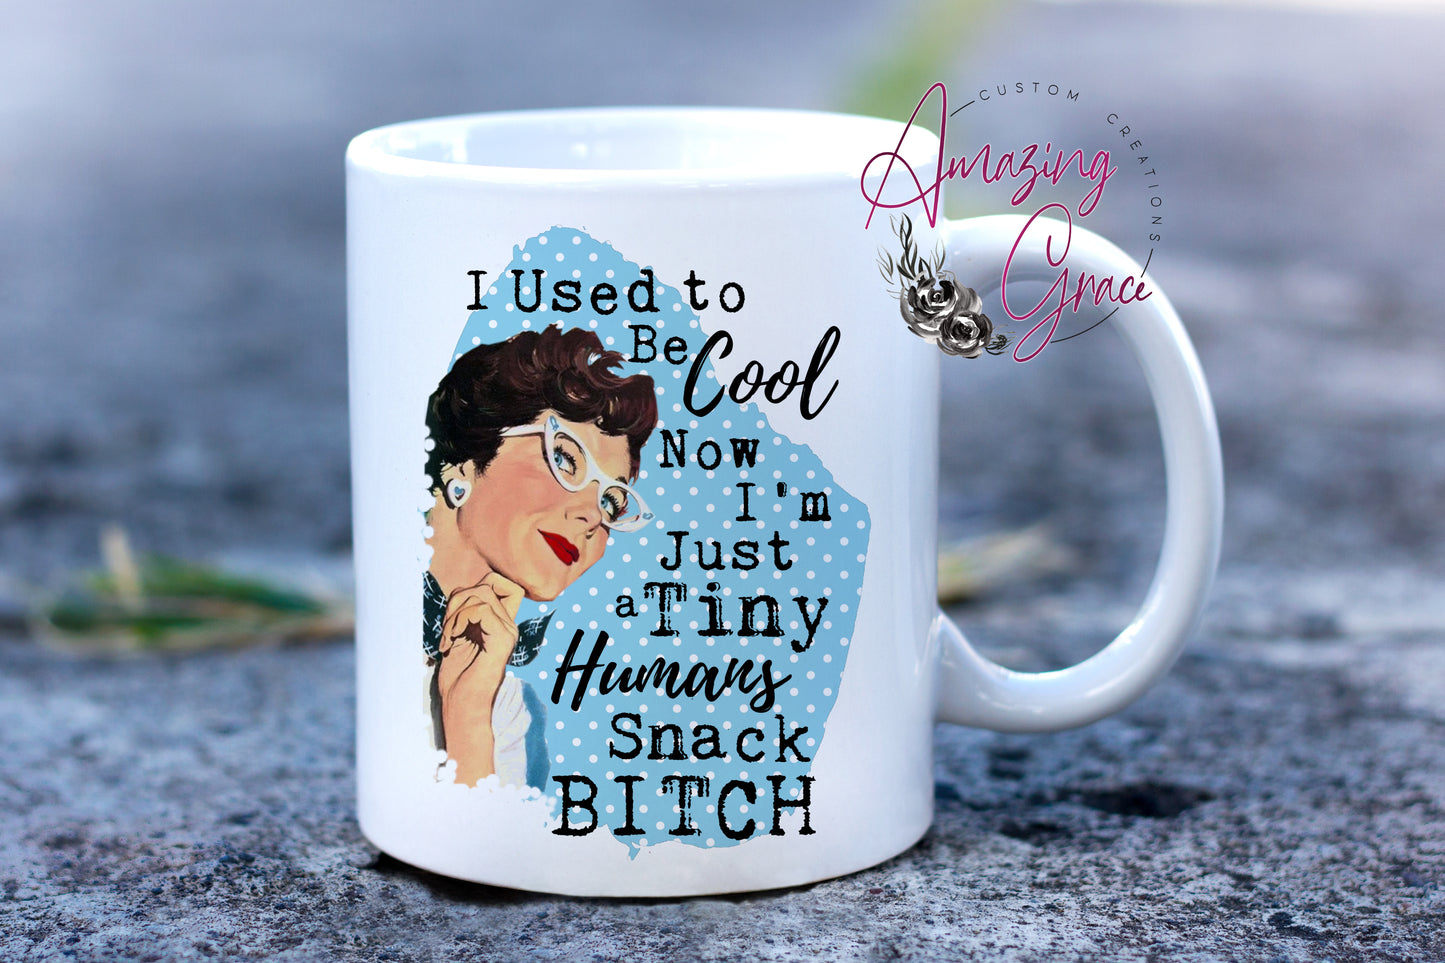 Adult humour mug - Retro housewives, various designs